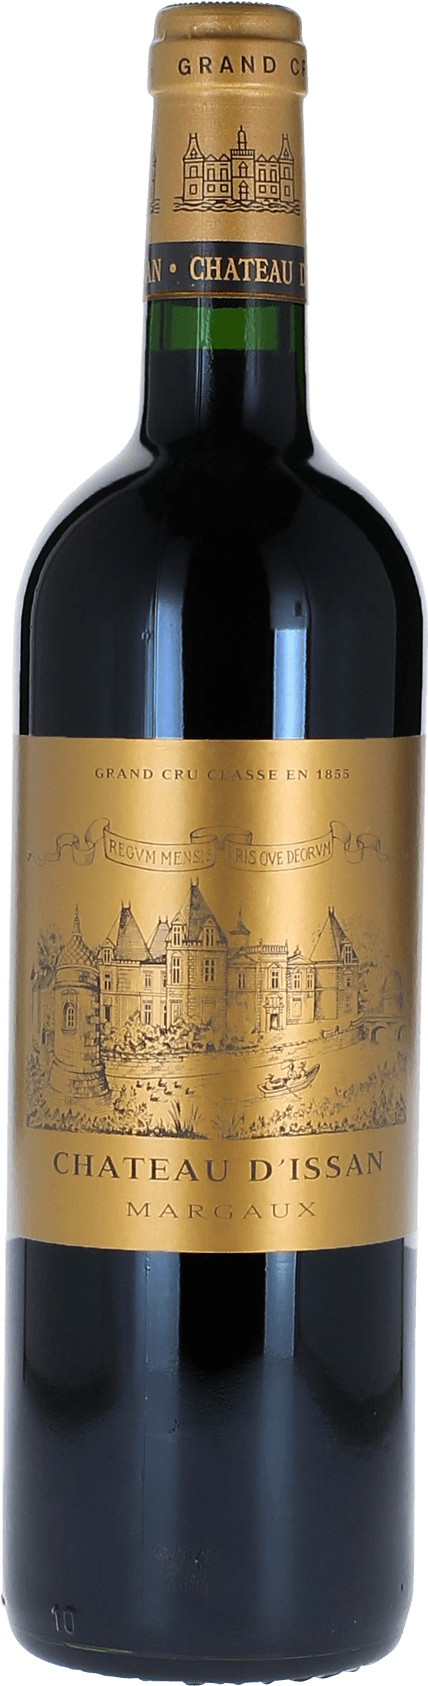 Issan 2015 3me Grand cru class Margaux, Bordeaux rouge